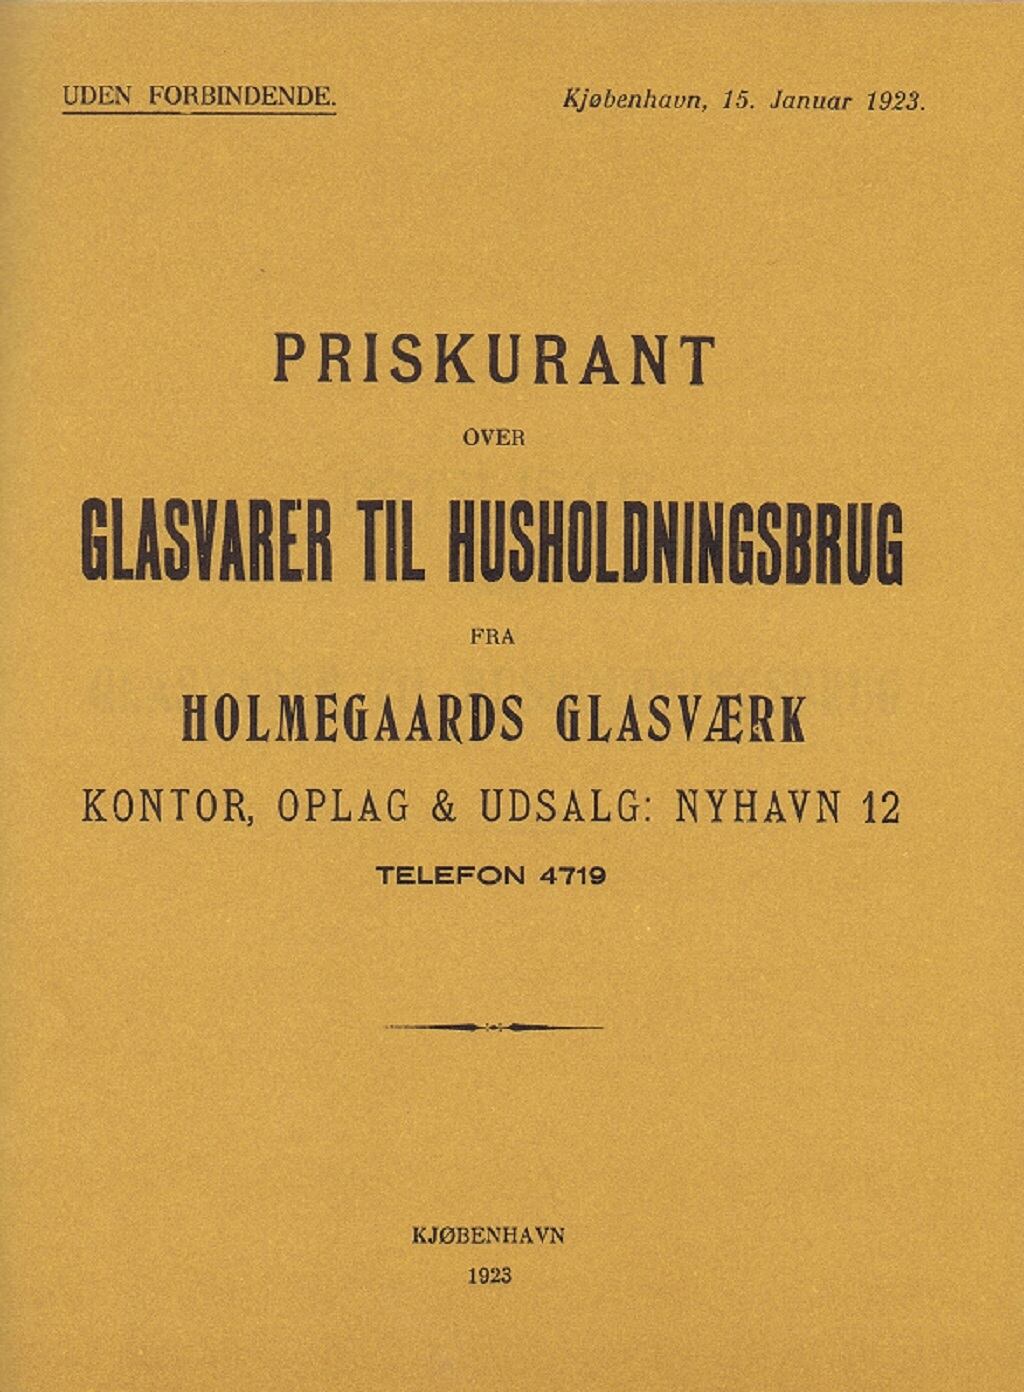 "Holmegaard 1923"